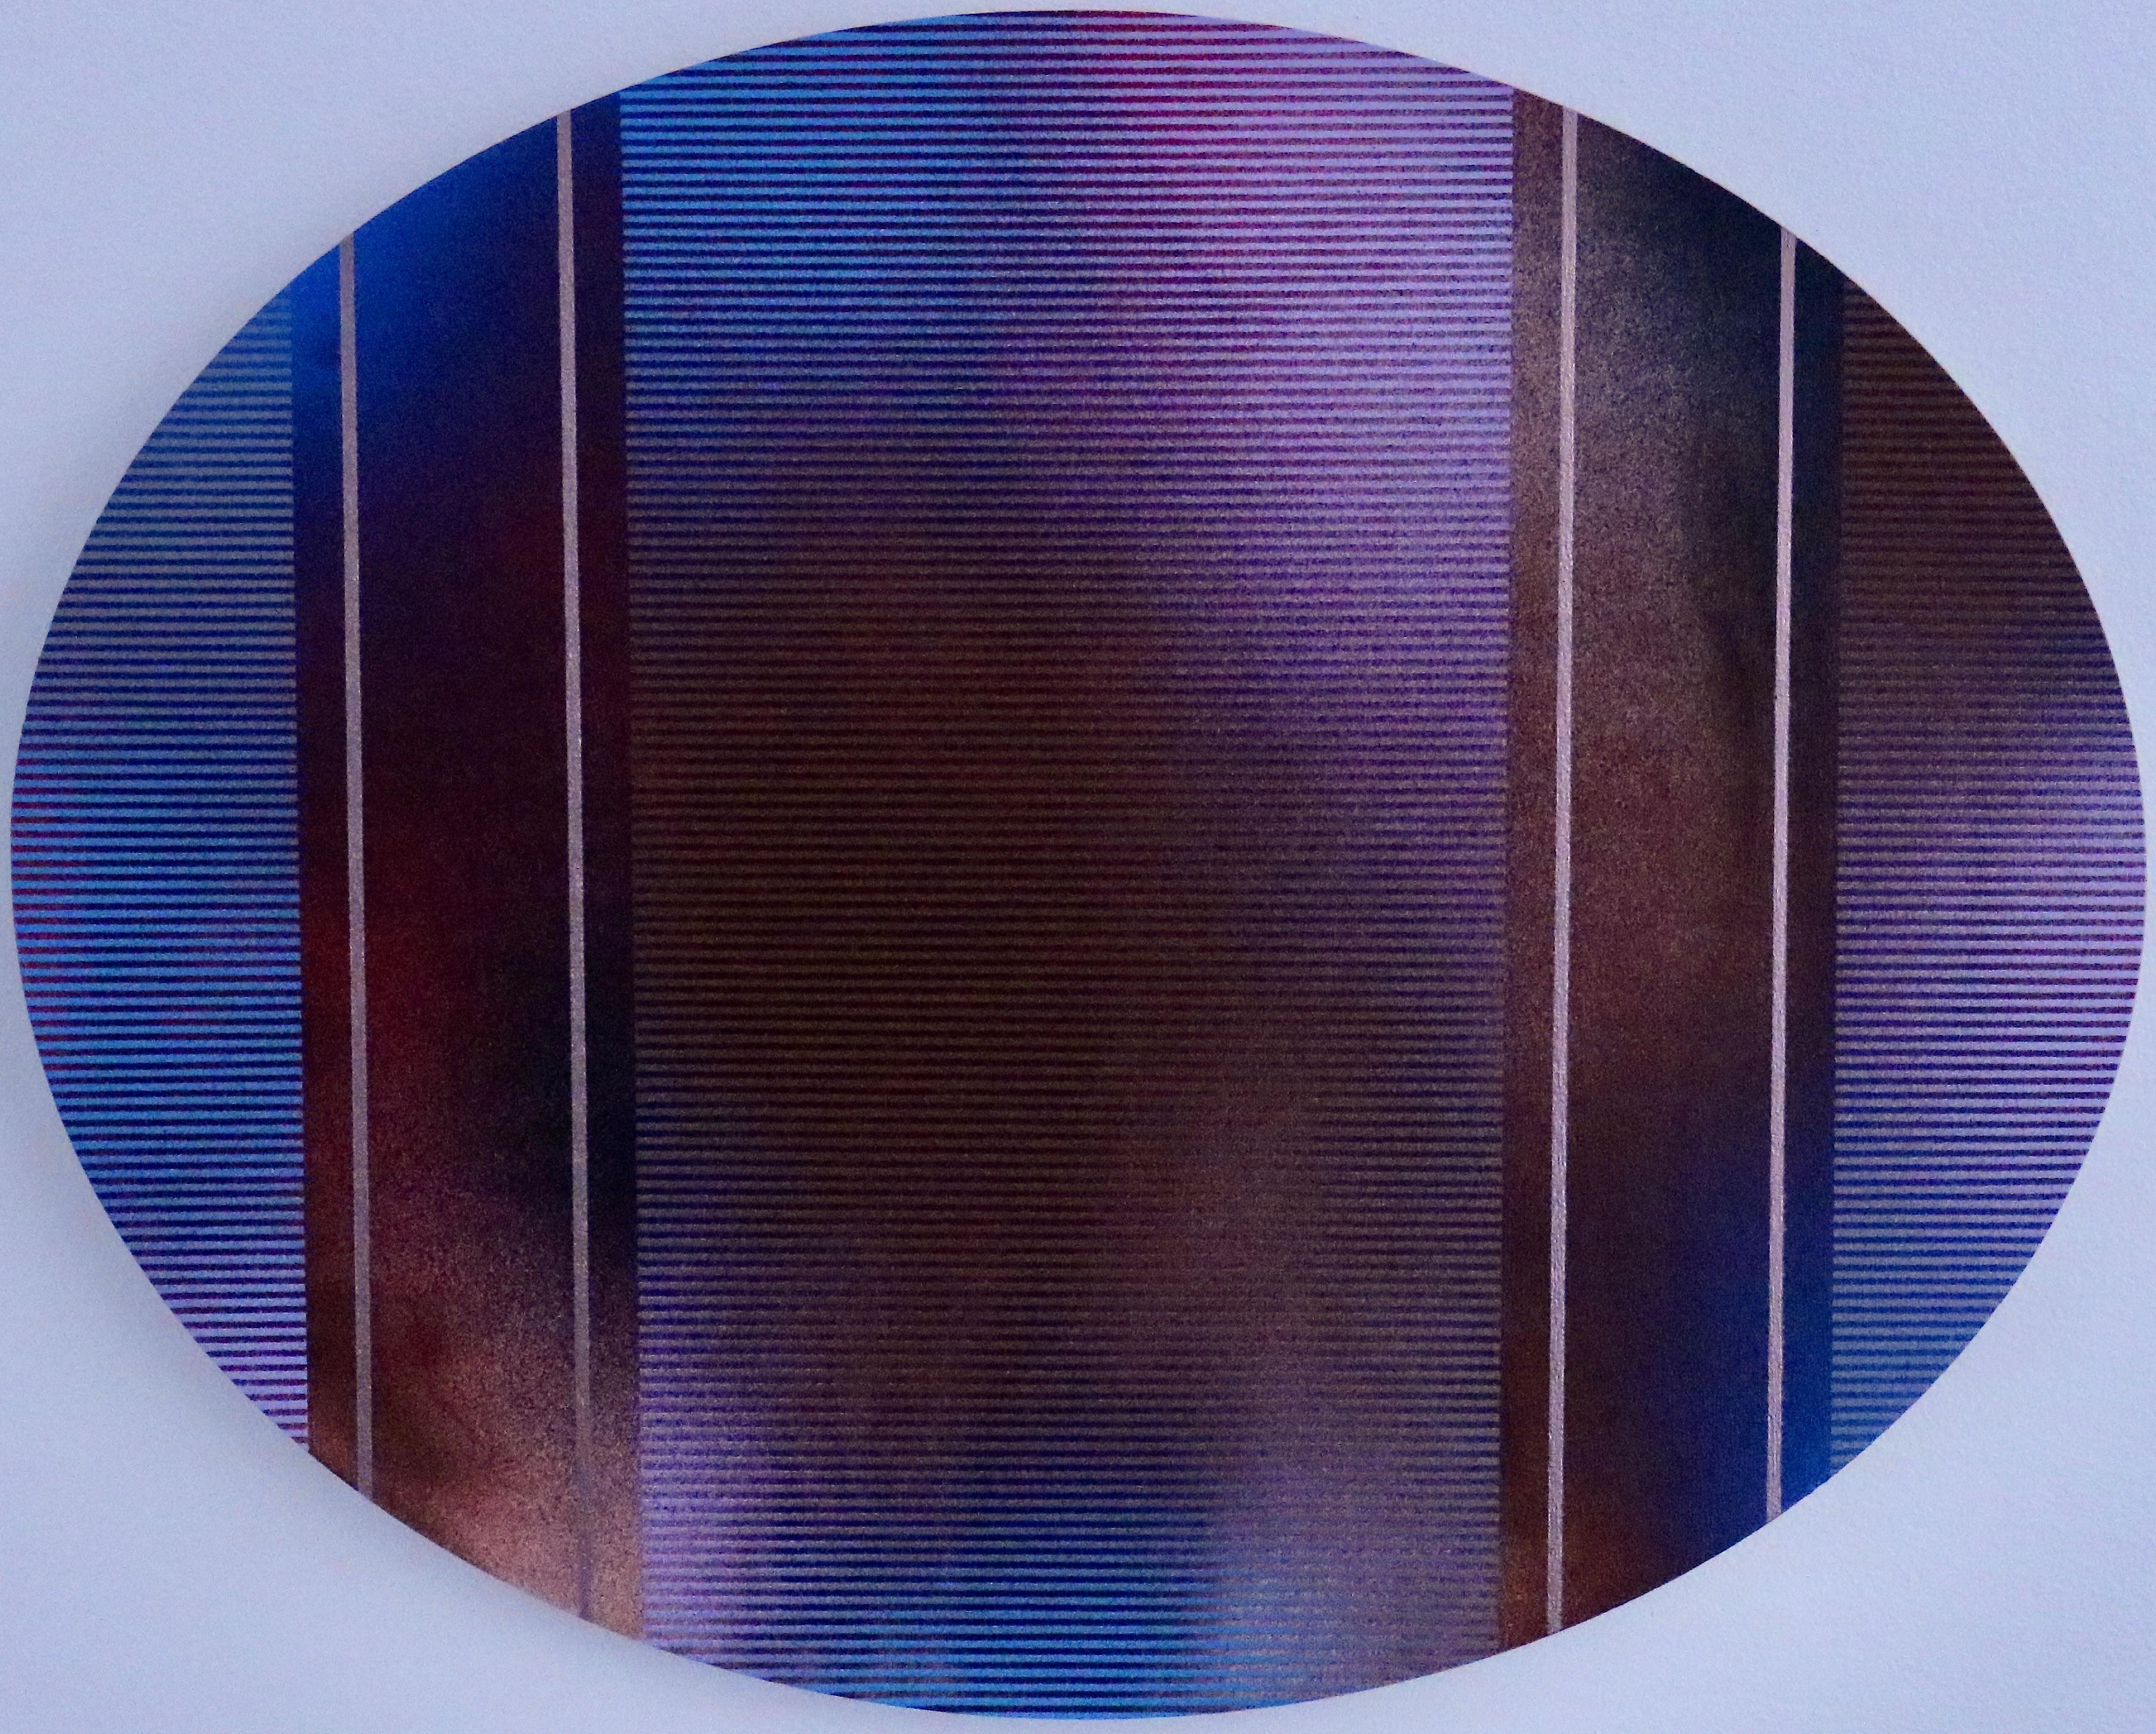 Mangata 54 Oval (circular tondo panel gold grid abstract wood Art Deco op art) - Abstract Geometric Mixed Media Art by Melisa Taylor Metzger